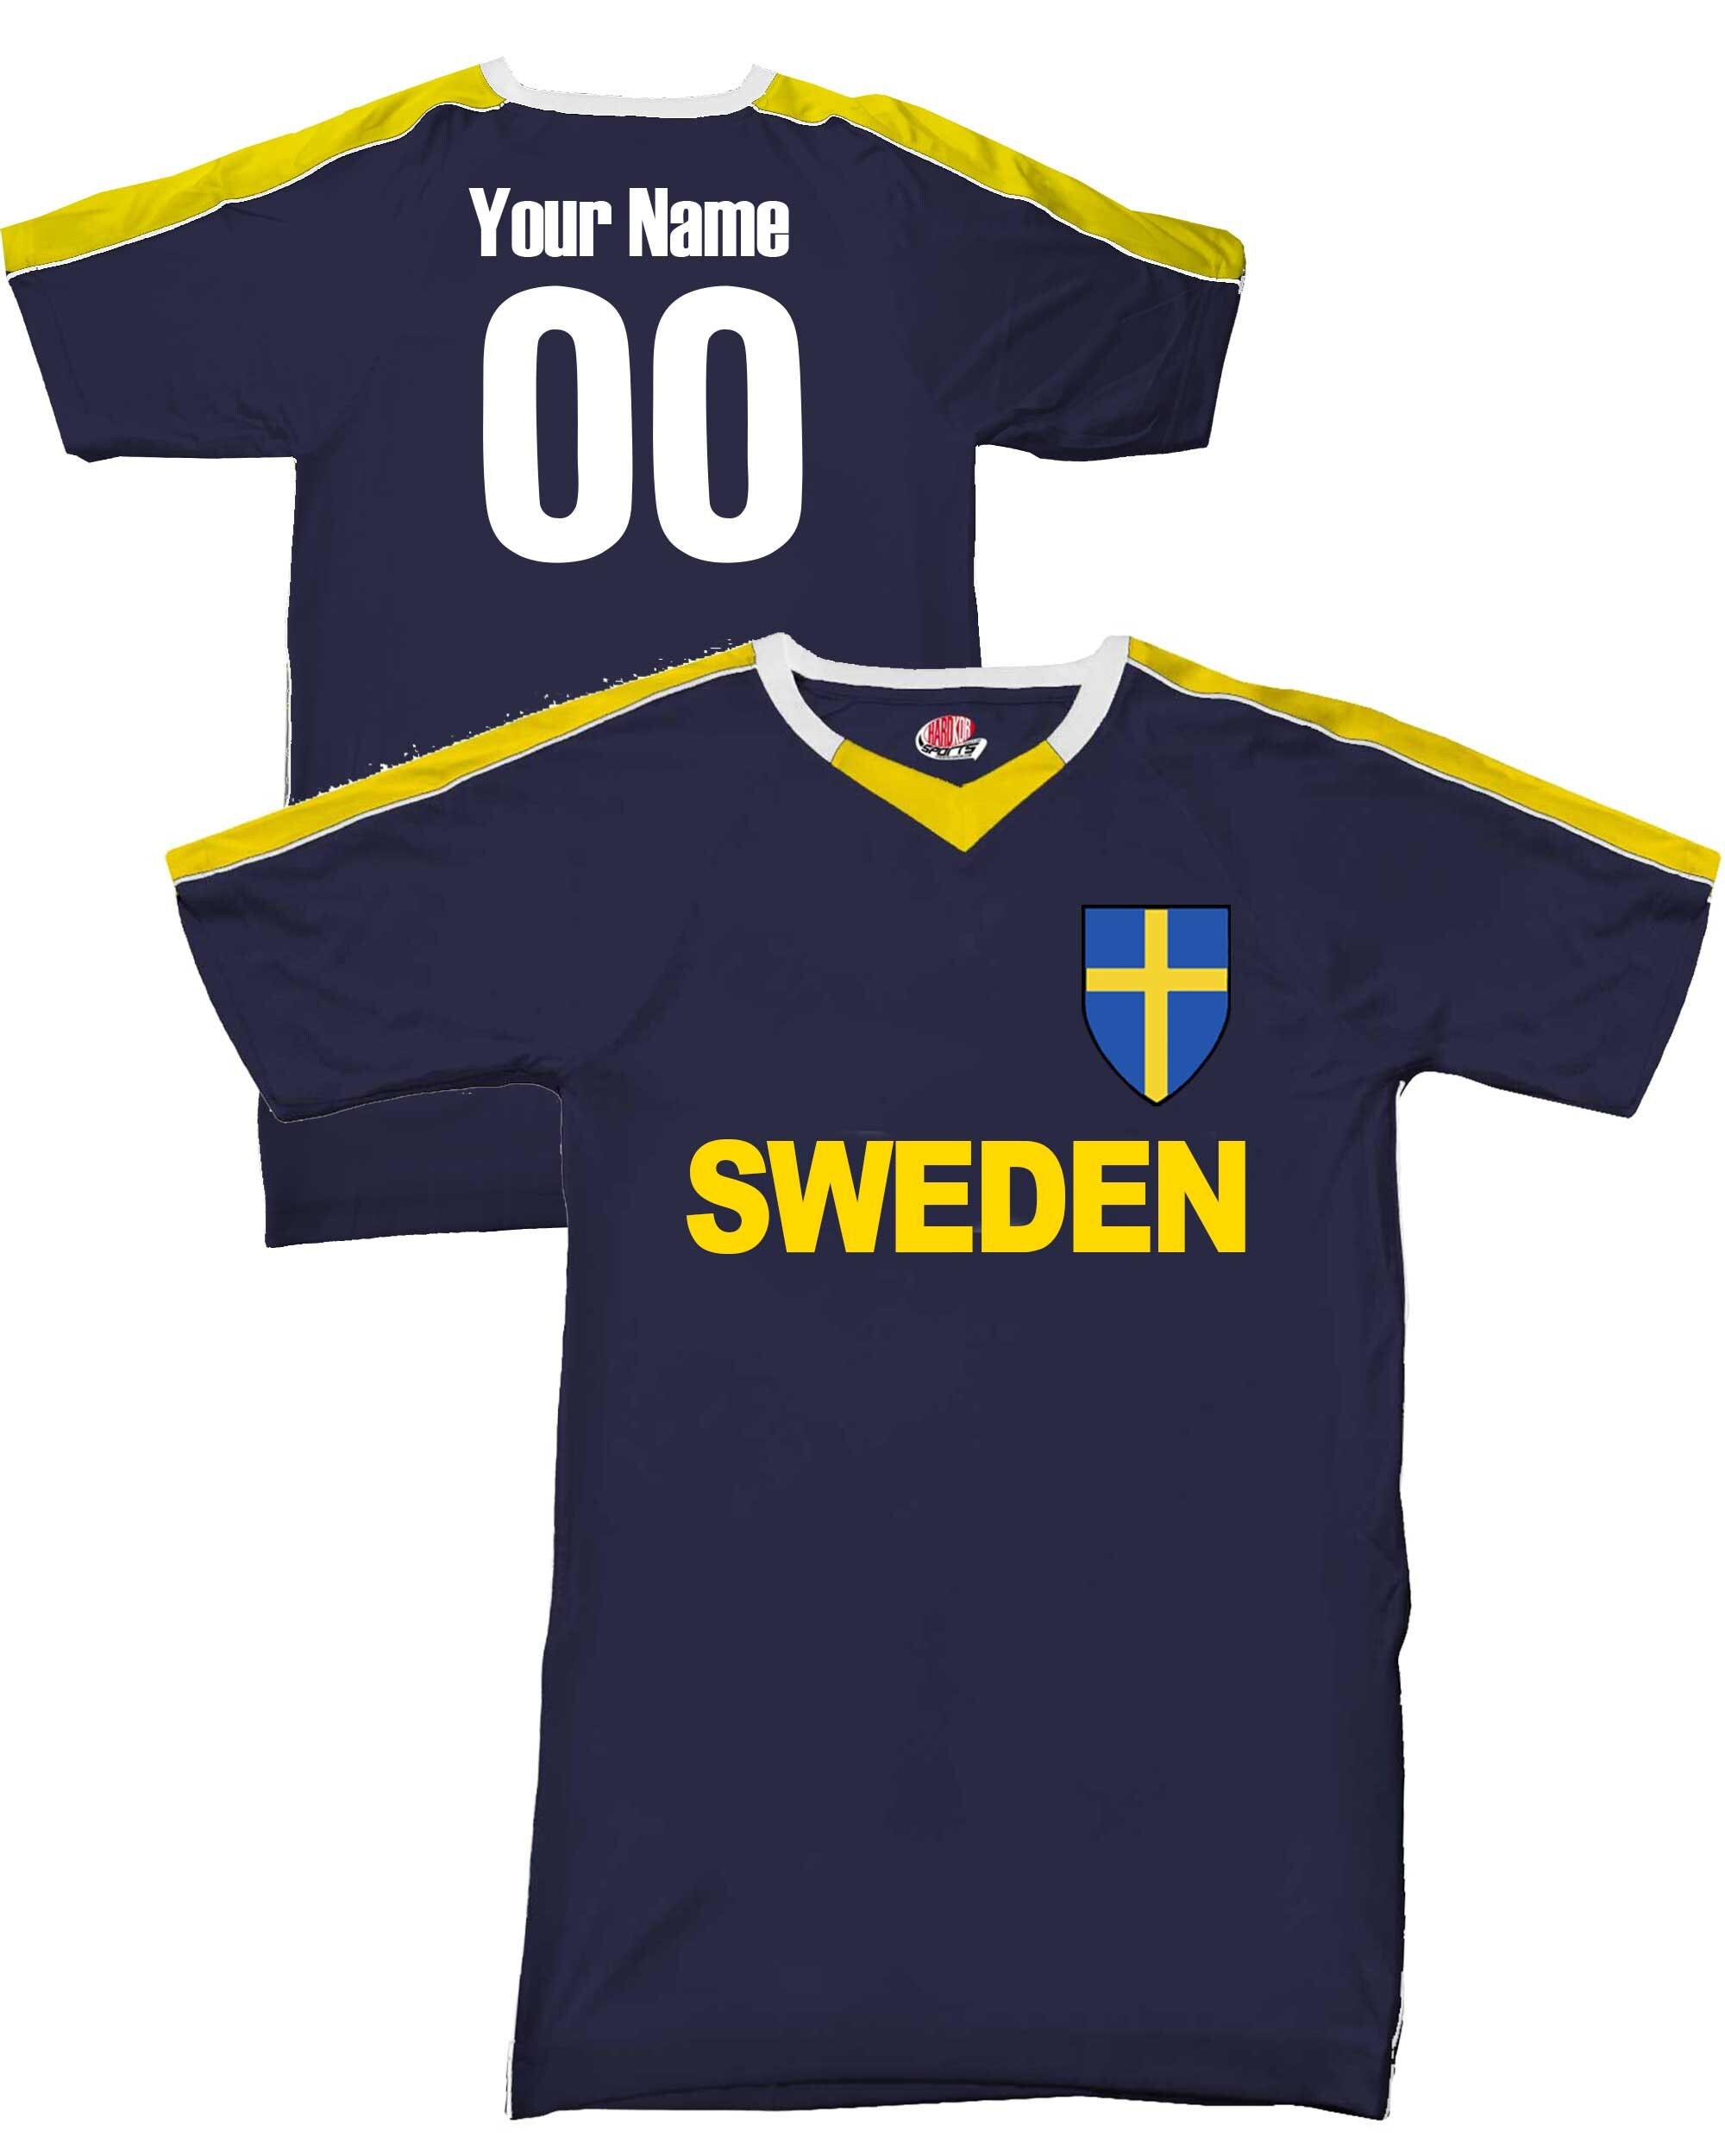 swedish women's soccer jersey